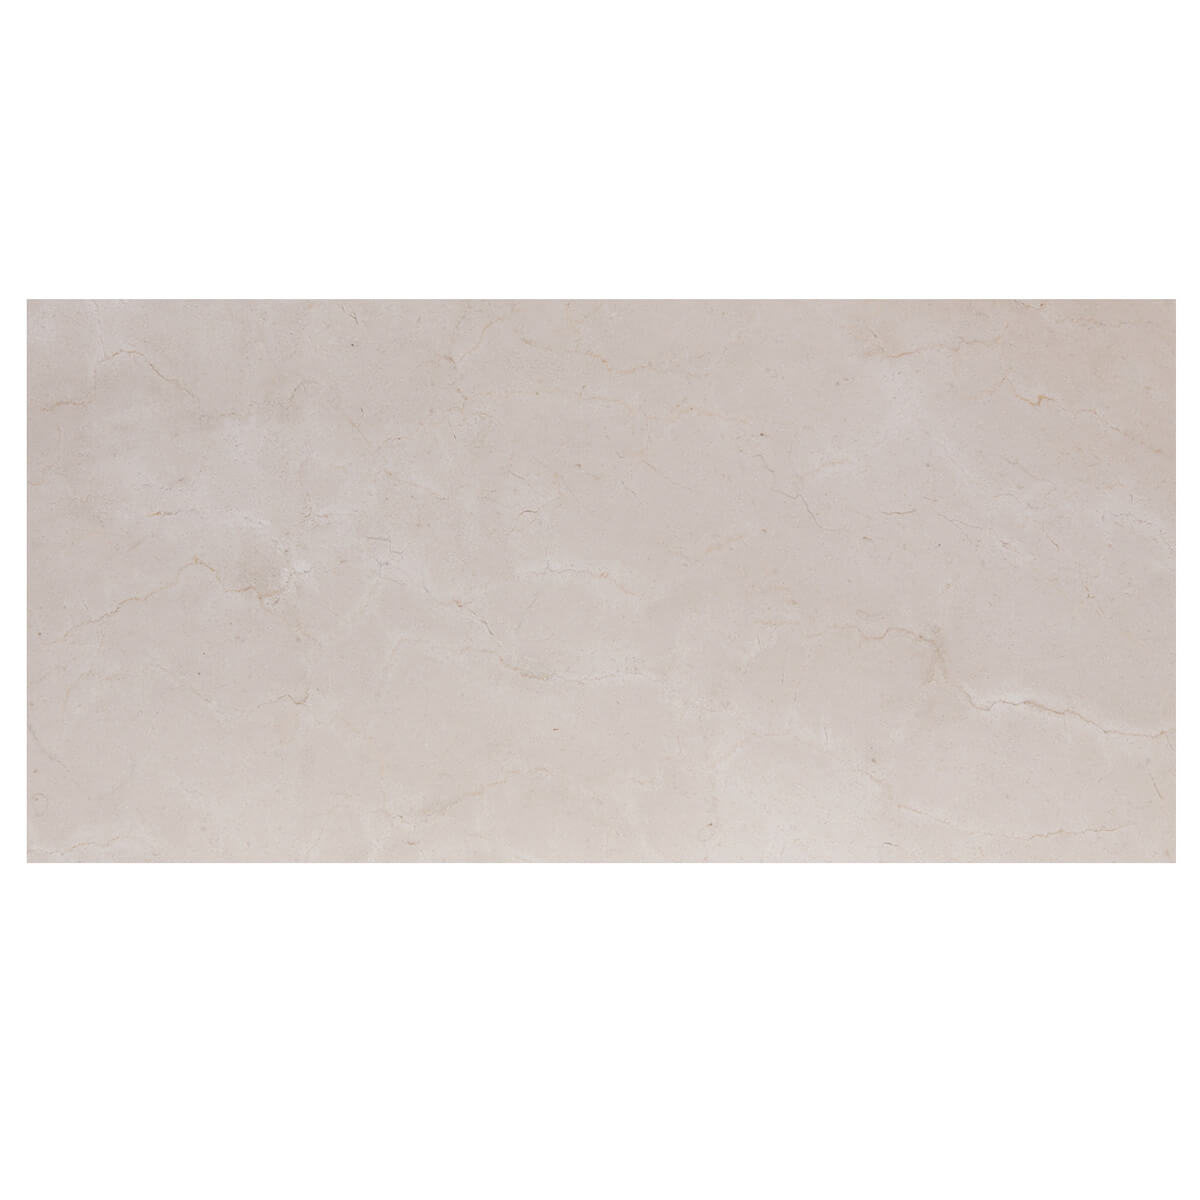 haussmann crema marfil limestone rectangle natural stone field tile 12x24 honed